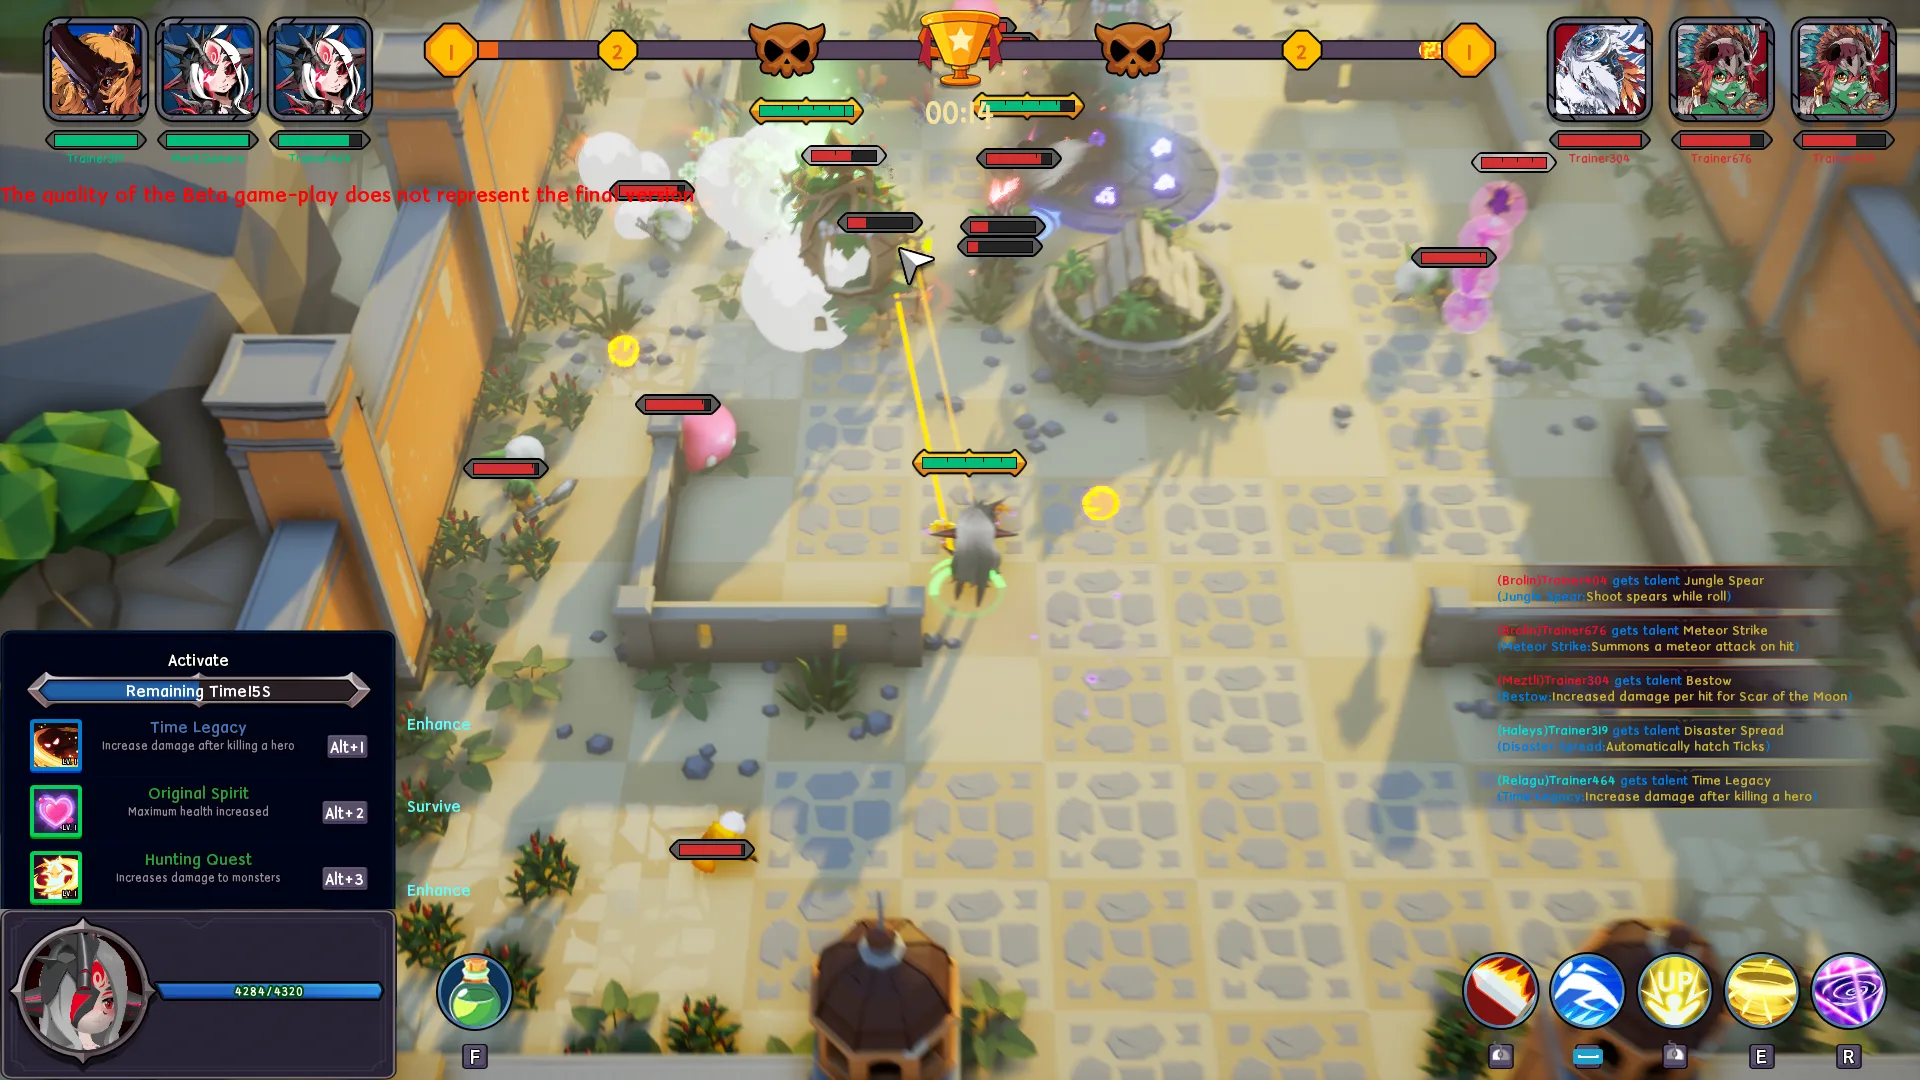 Tearing Spaces gameplay: fighting with enemies